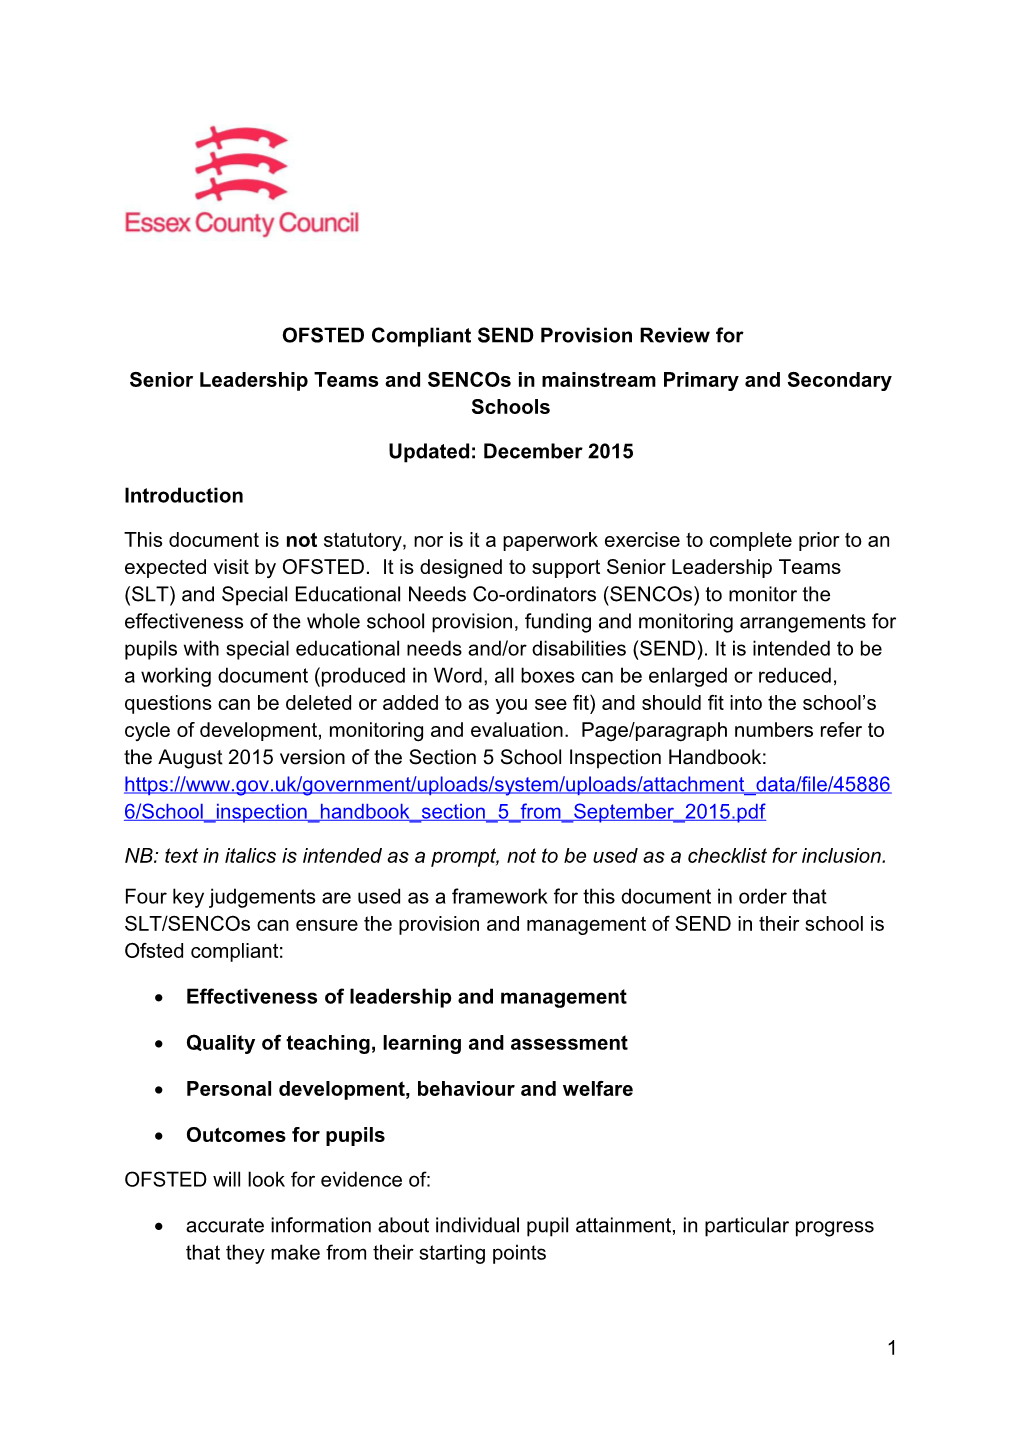 Senior Leadership Teams and Sencos in Mainstream Primary and Secondary Schools